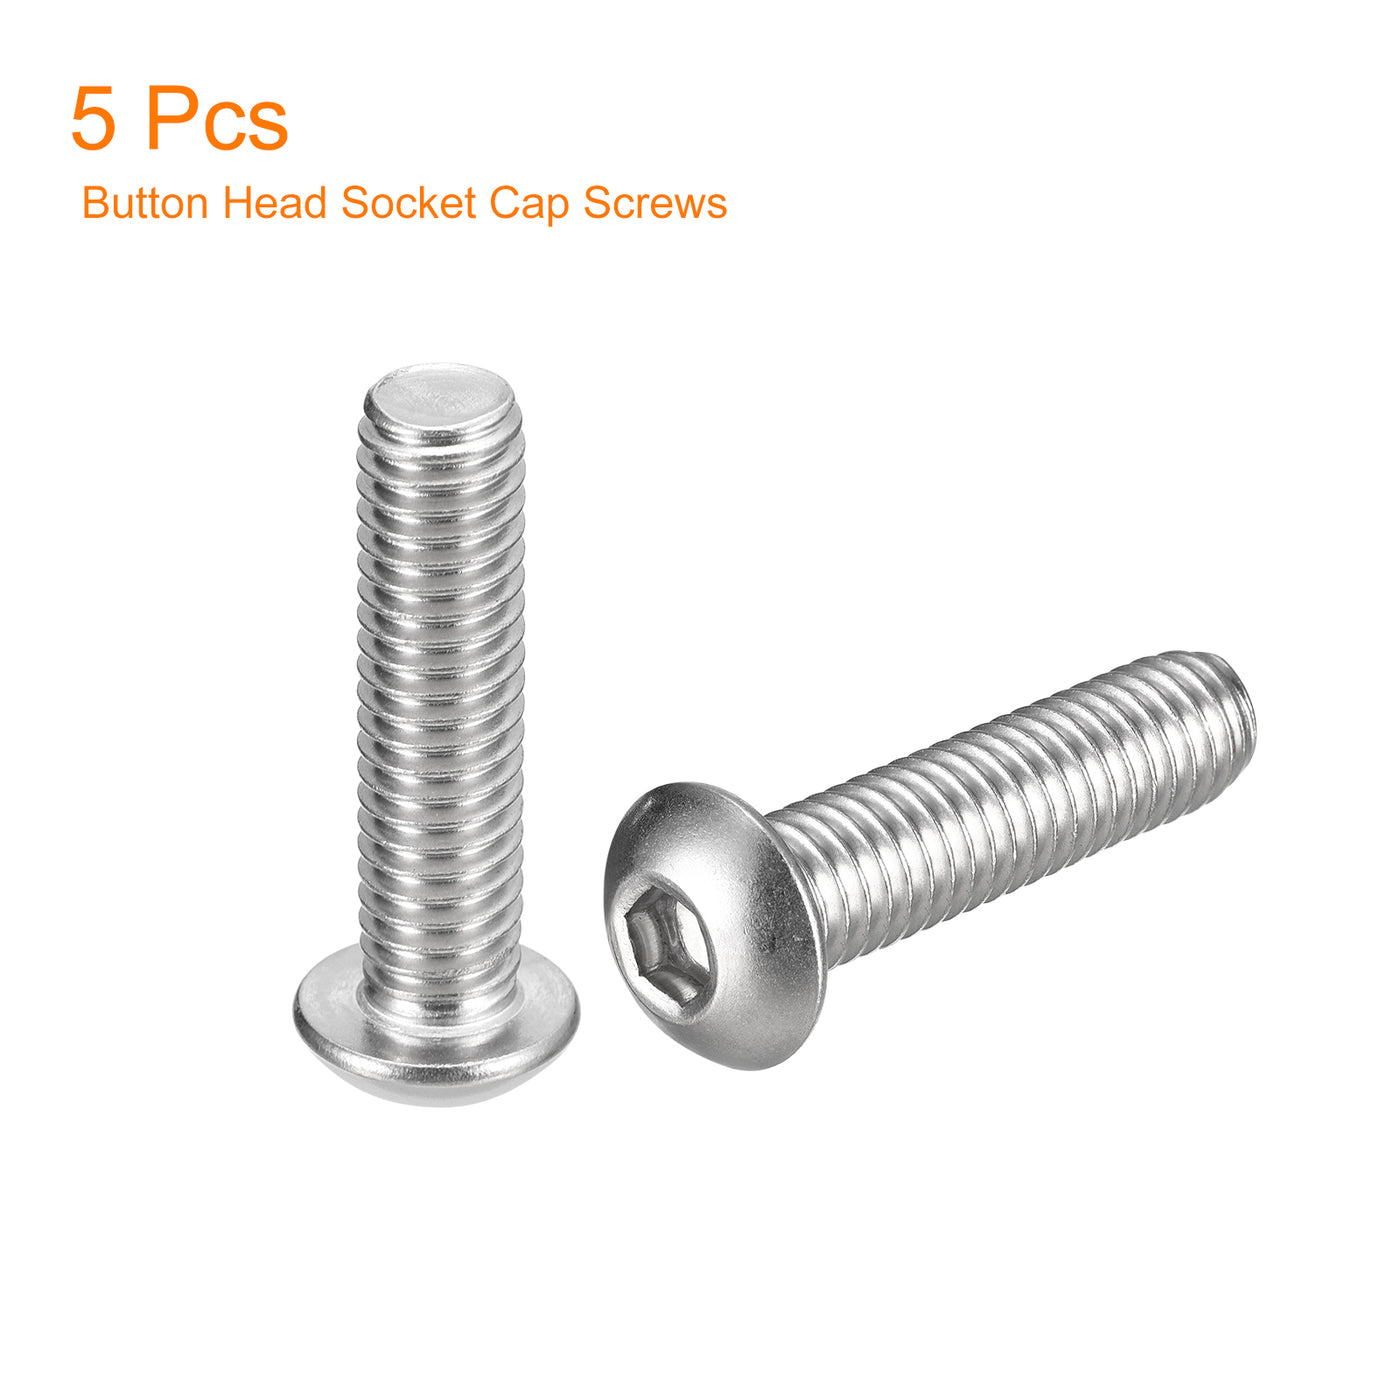 uxcell Uxcell 3/8-16x1-1/2" Button Head Socket Cap Screws, 5pcs 304 Stainless Steel Screws